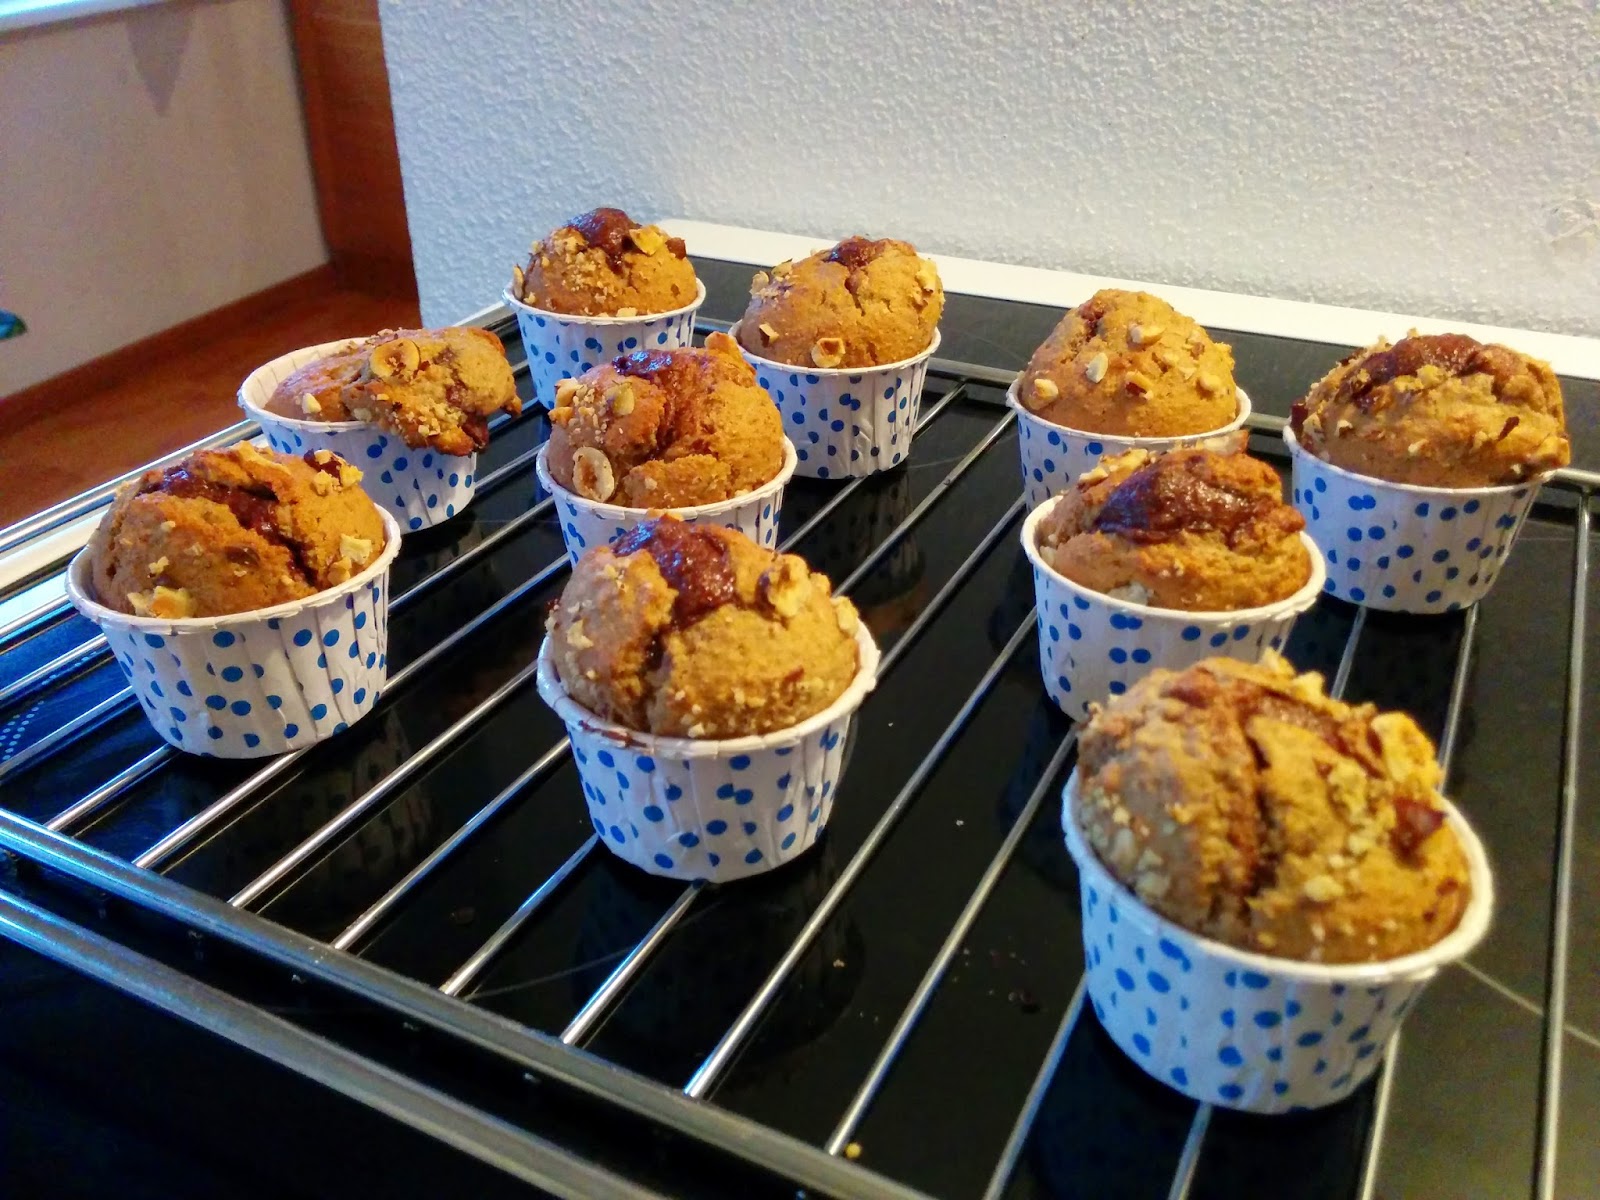 http://camilleenchocolat.blogspot.fr/2015/01/muffins-aux-noisettes-et-nutella.html